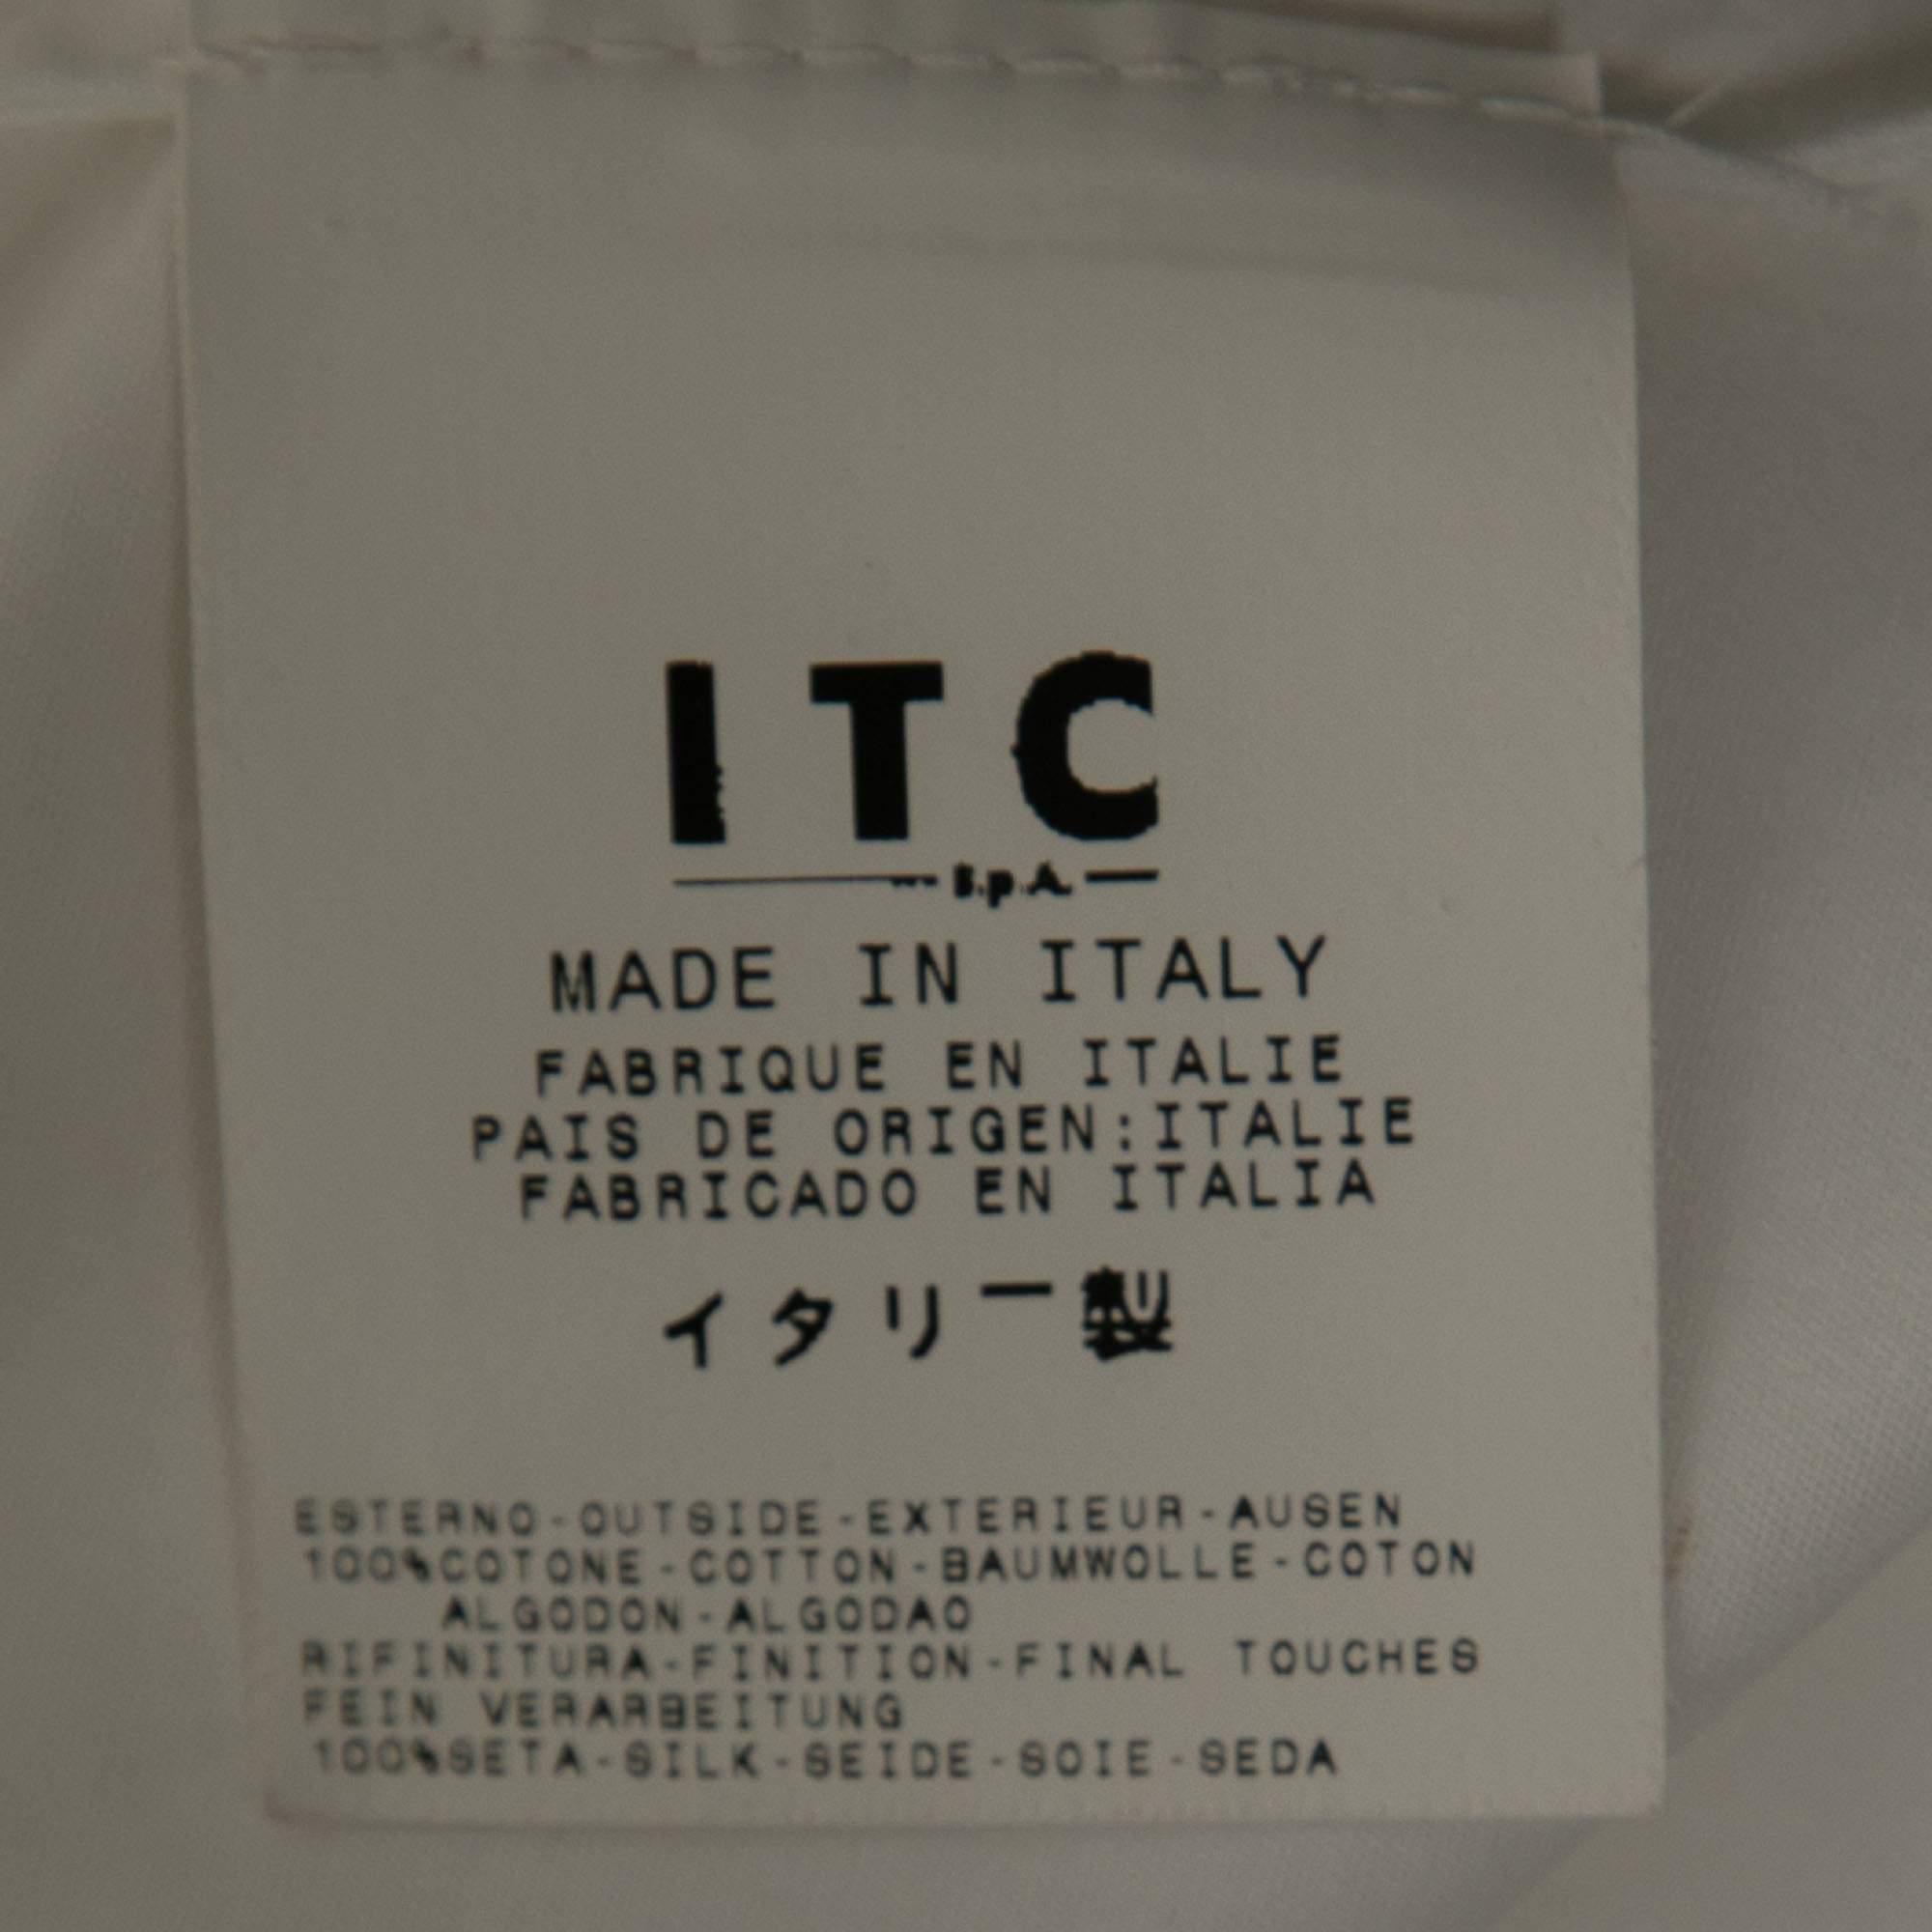 Gianfranco Ferre Off White Cotton Tassel Detail Button Front Shirt XL